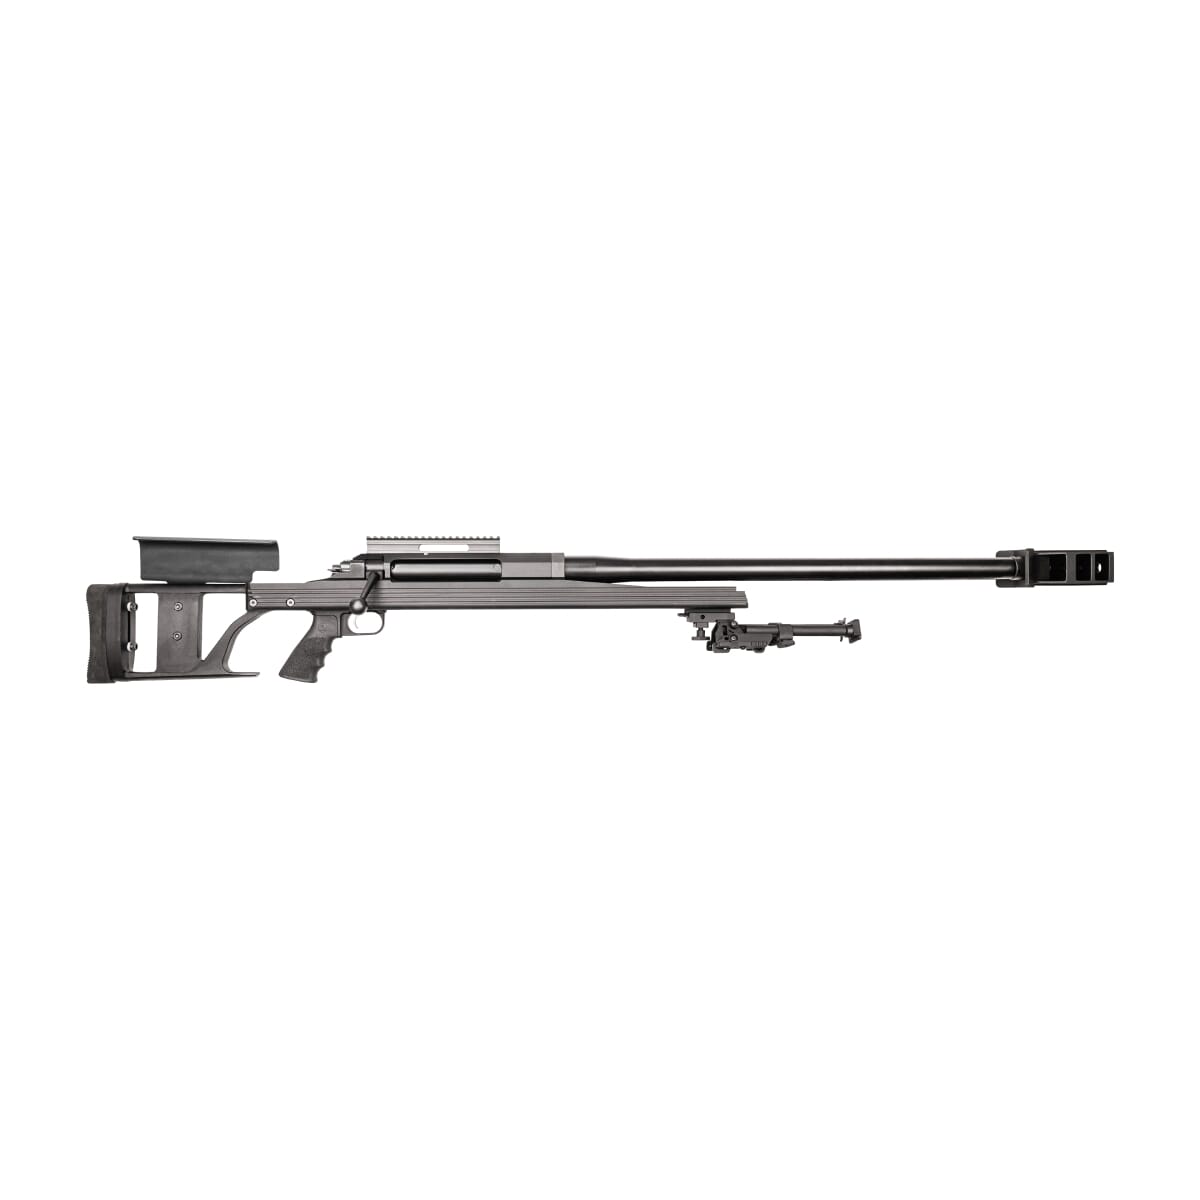 Tactical Bipod LRA Light Long Rifle Scope Bipod For Outdoor Riflescope